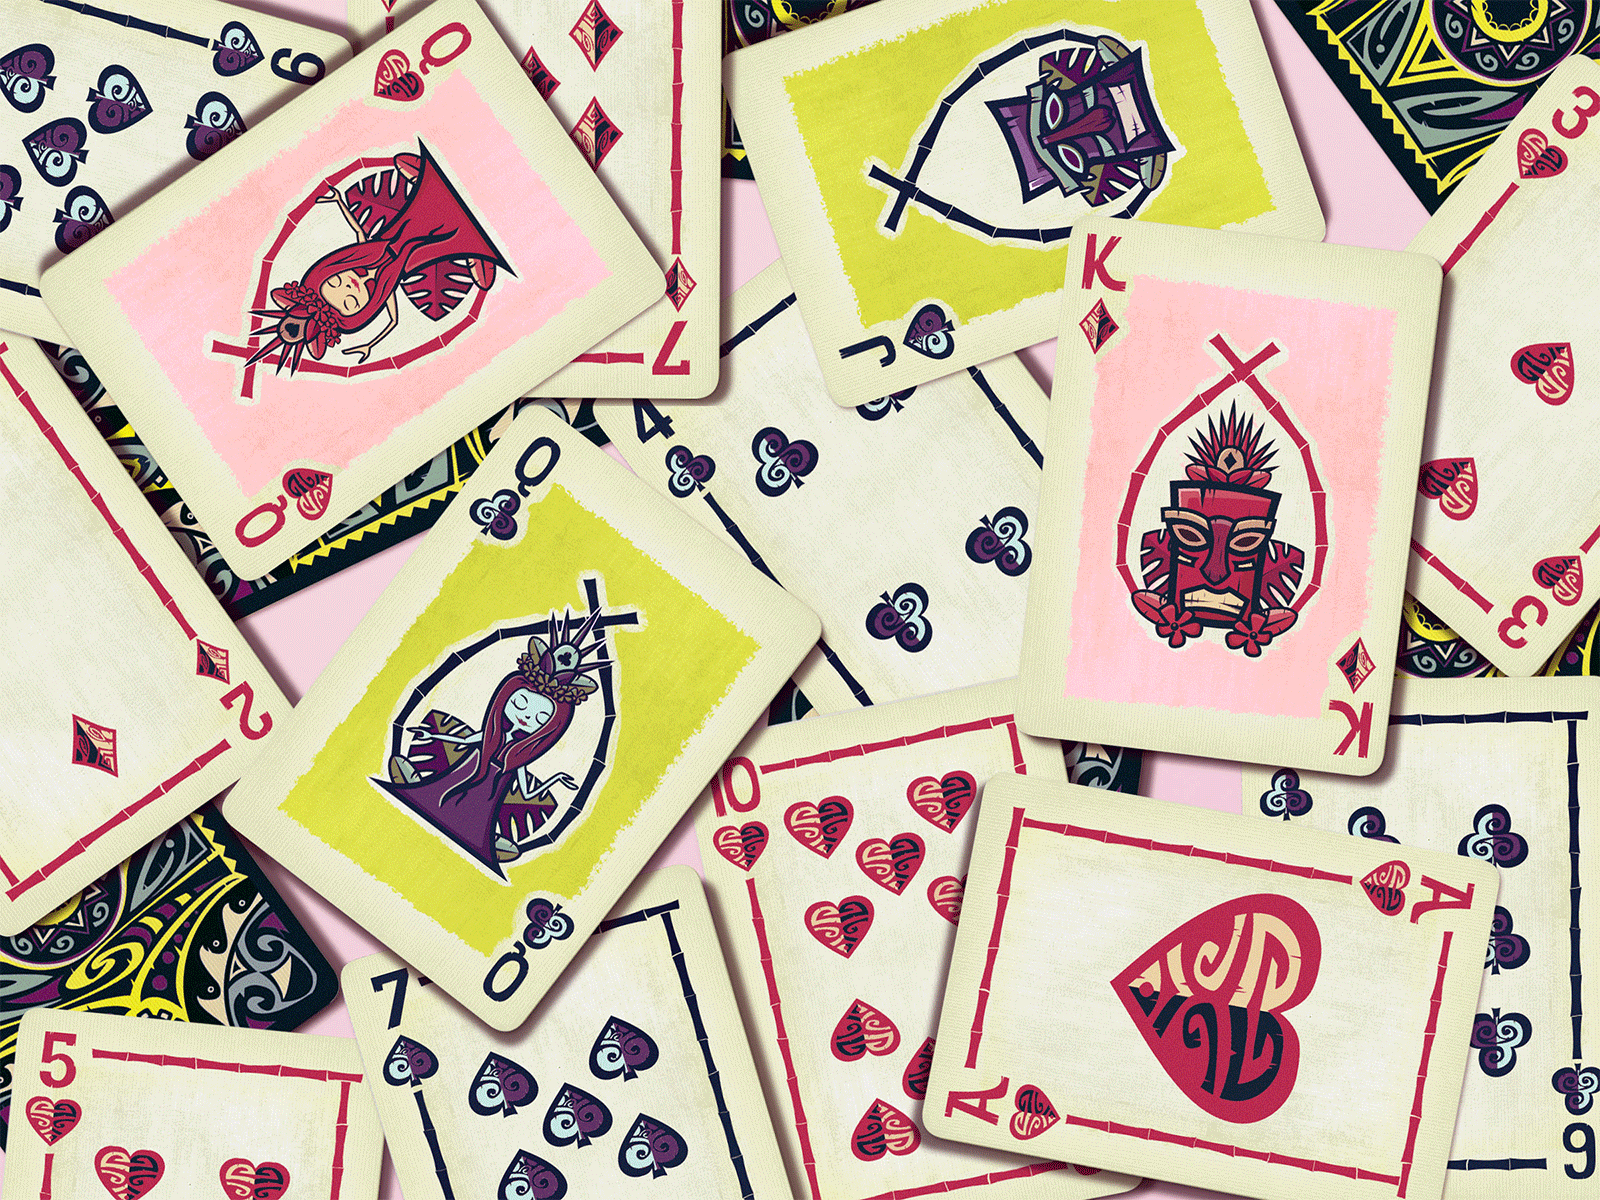 Tiki Themed Playing Cards